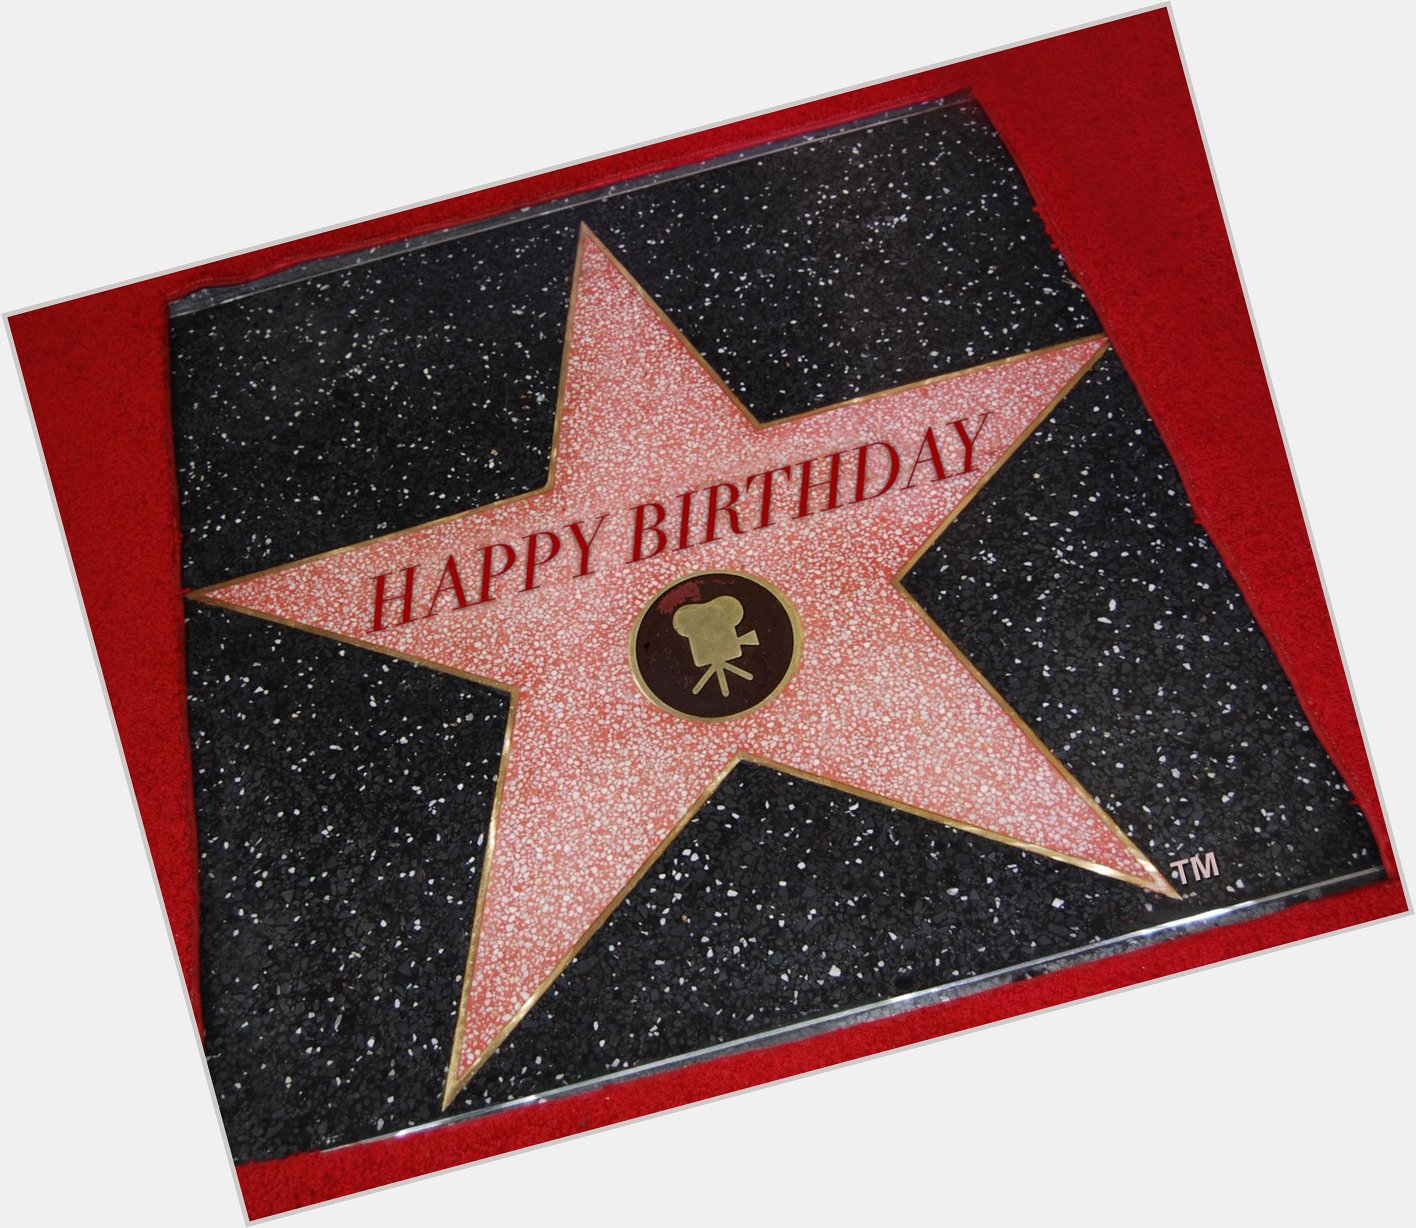 Happy birthday to Walk of Famer Michelle Pfeiffer! 